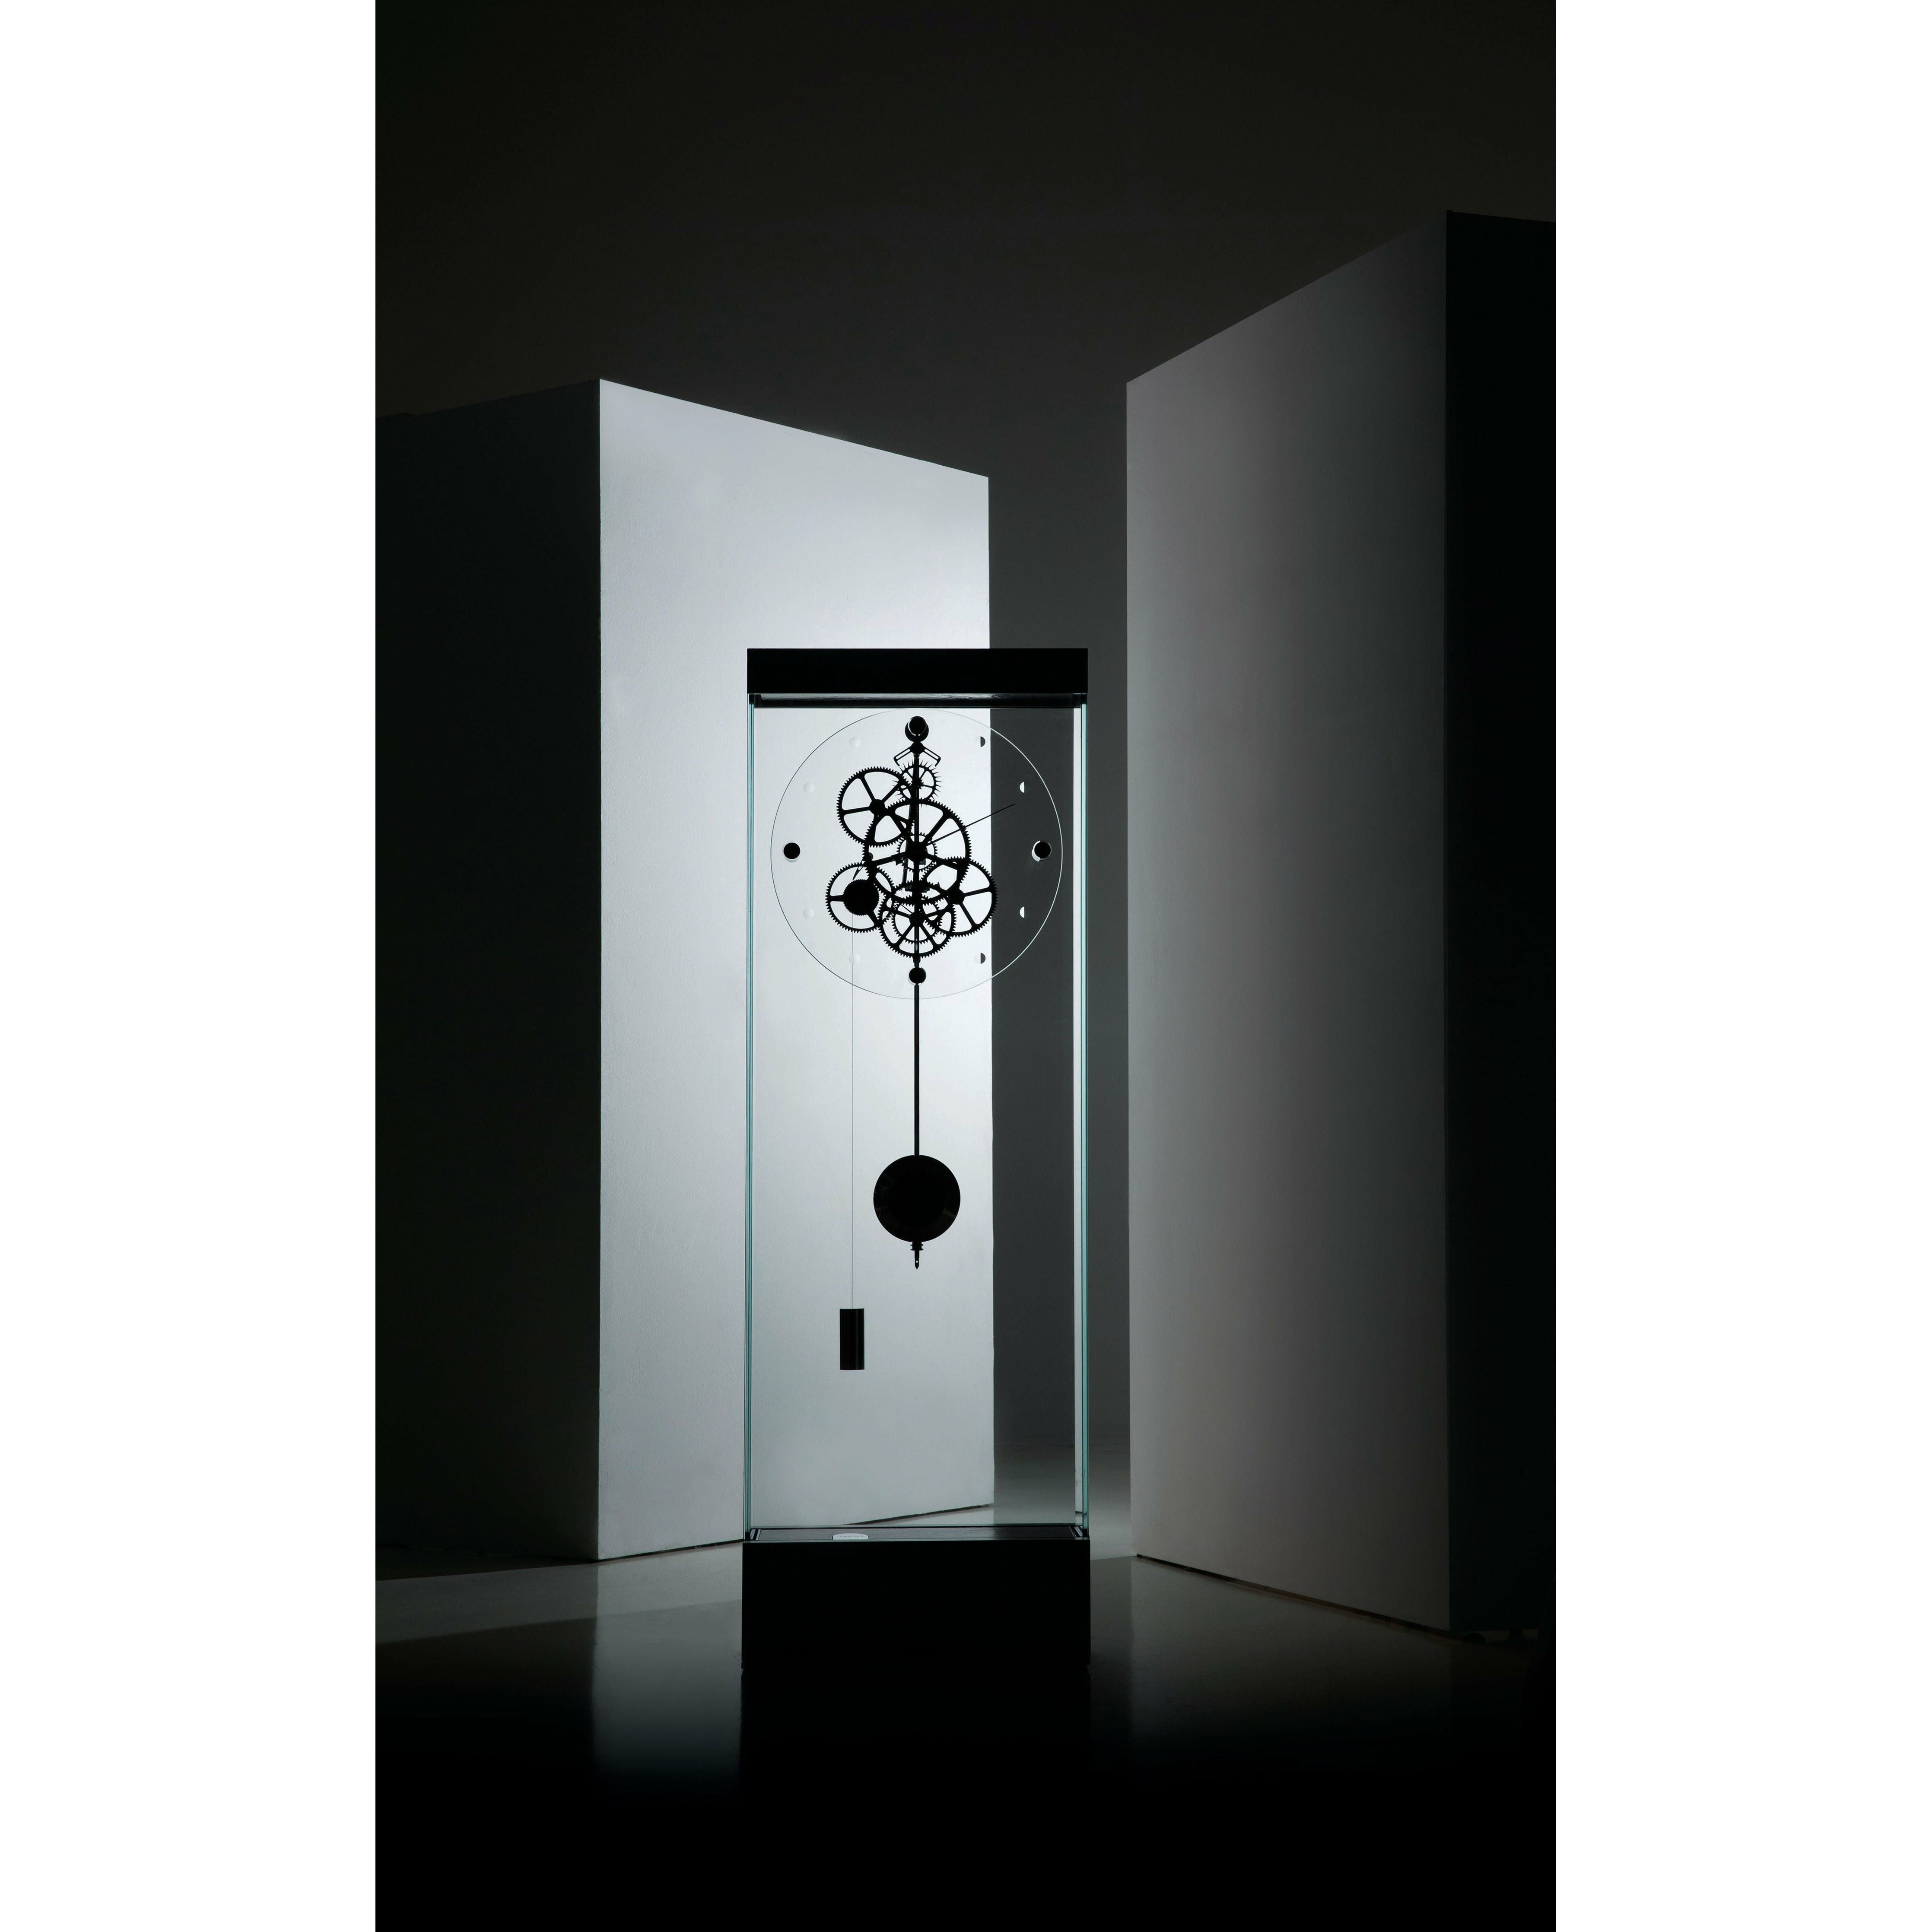 TAKTO Adagio Floor Pendulum Clock by Gianfranco Barban - Made in Italy